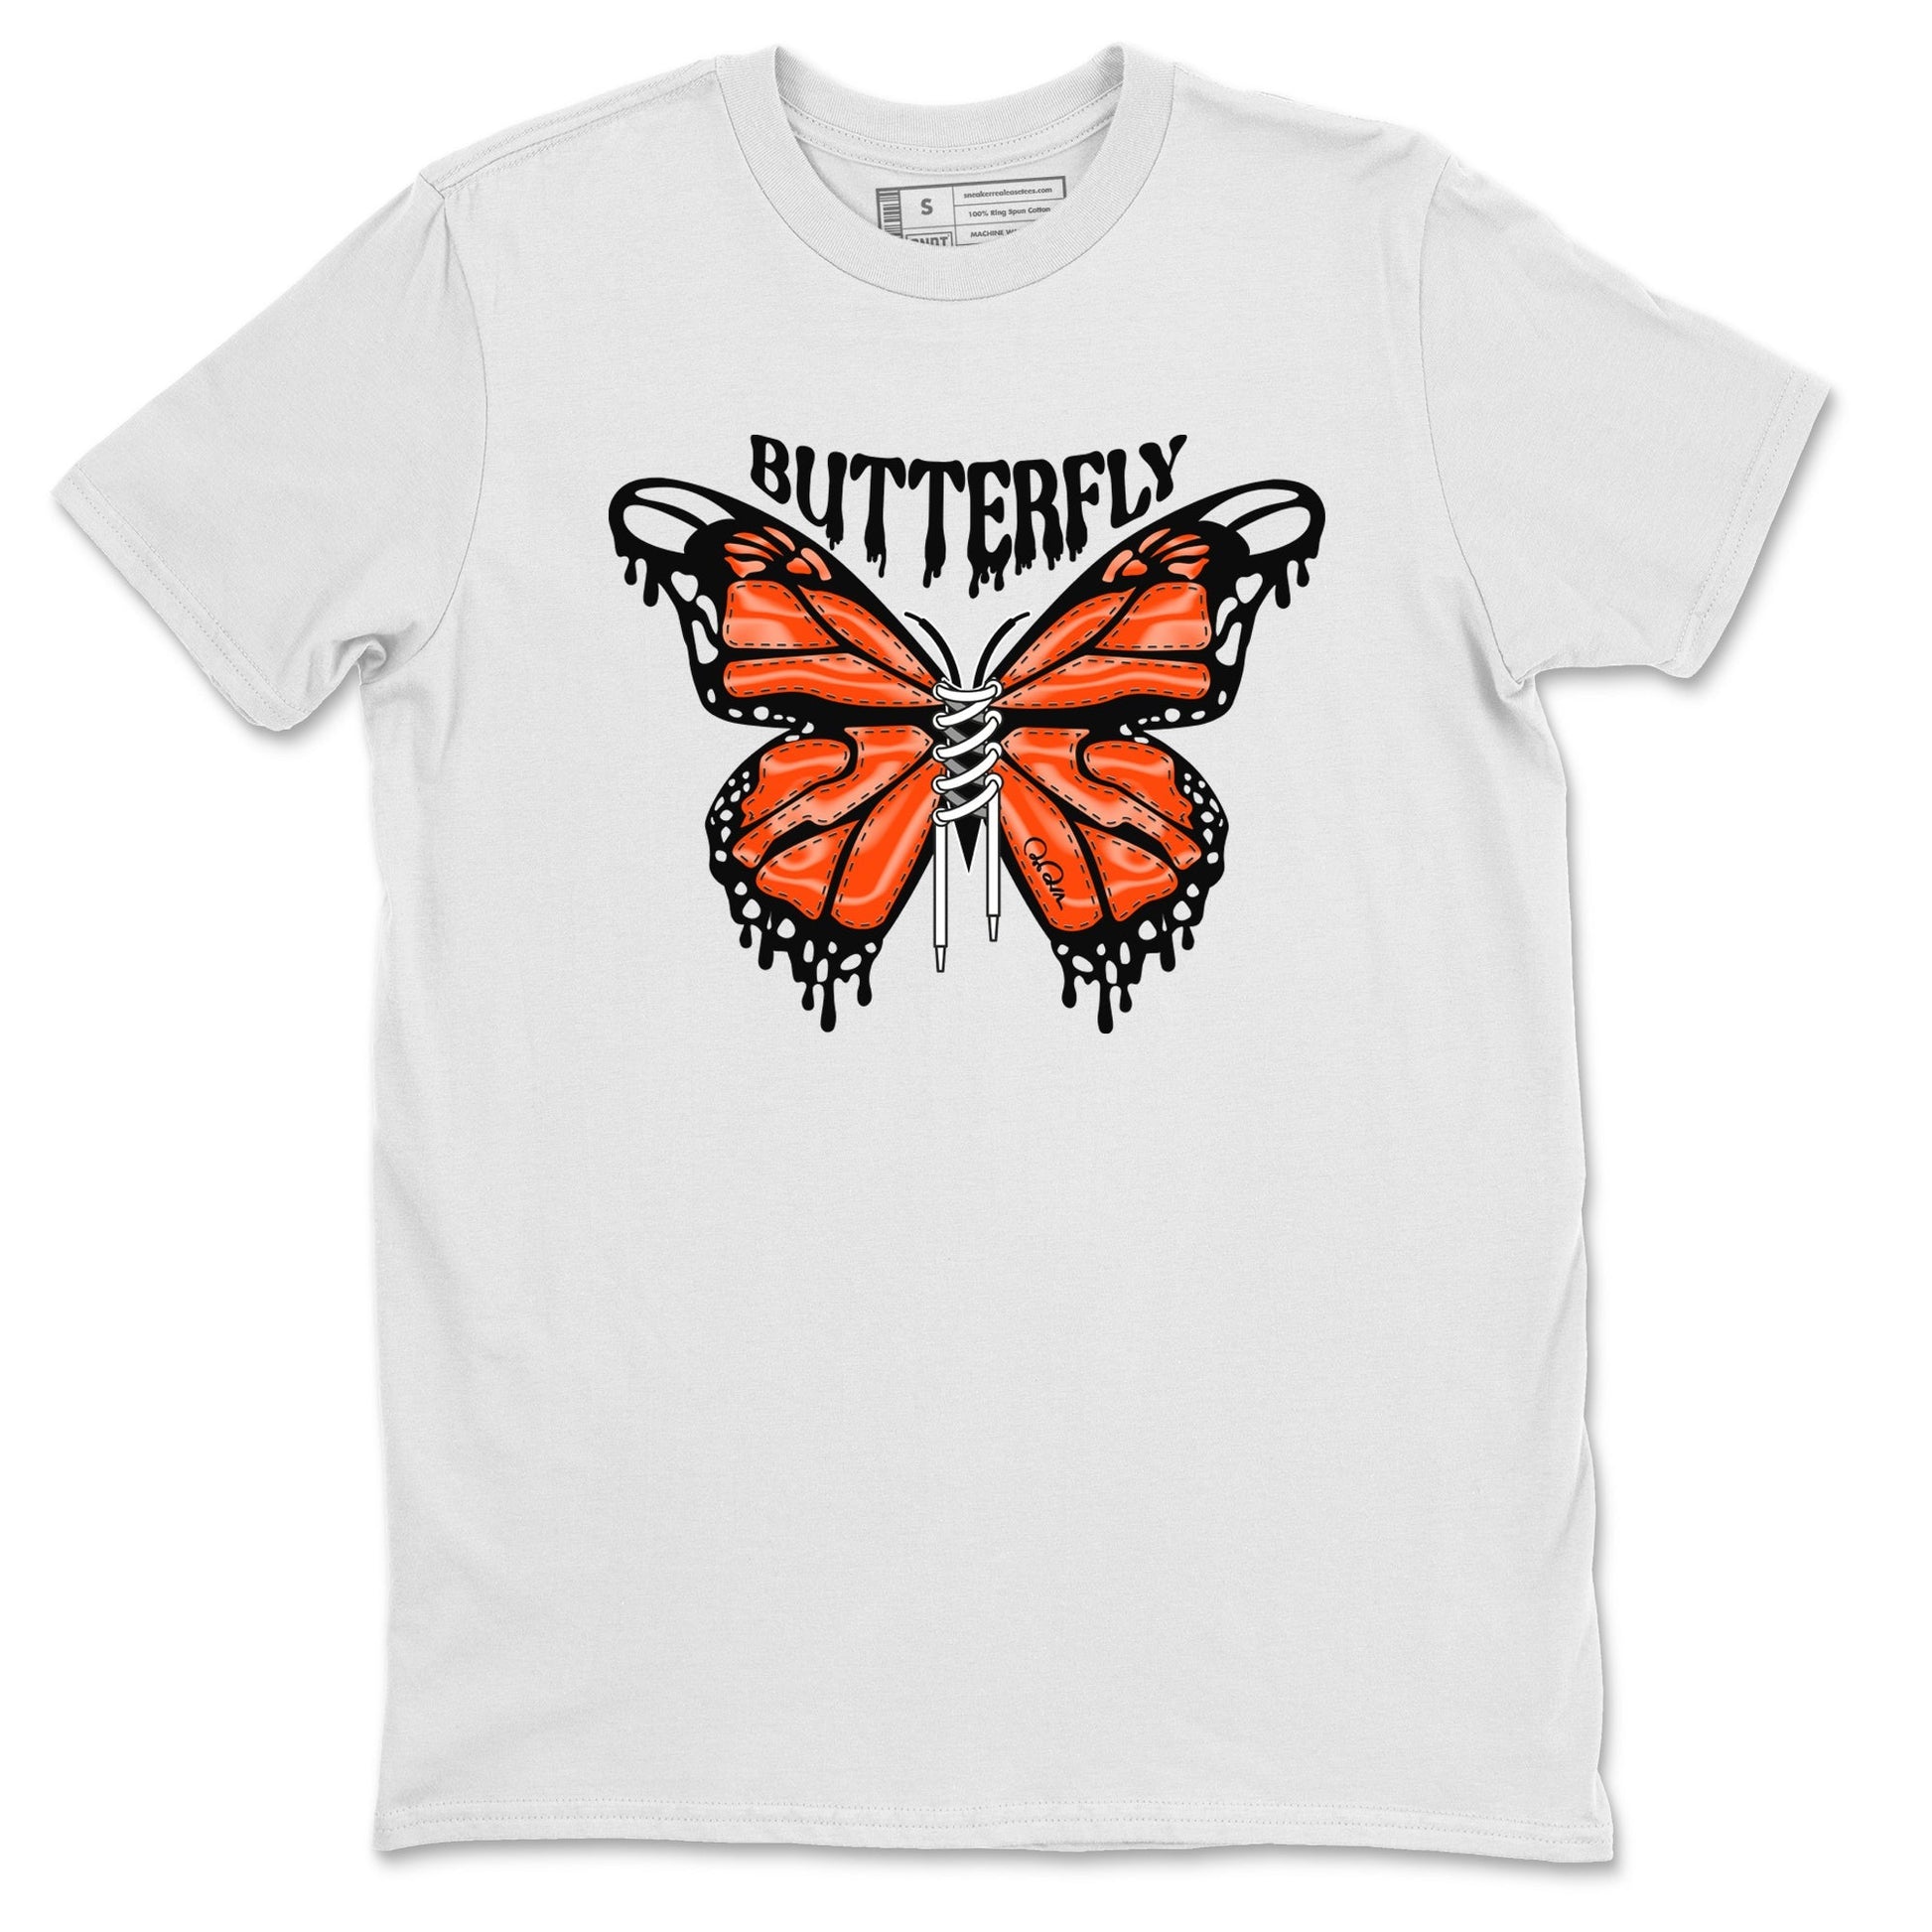 Air Jordan 12 Brilliant Orange Sneaker Match Tees Butterfly Sneaker Tees AJ12 Brilliant Orange Sneaker Release Tees Unisex Shirts White 2